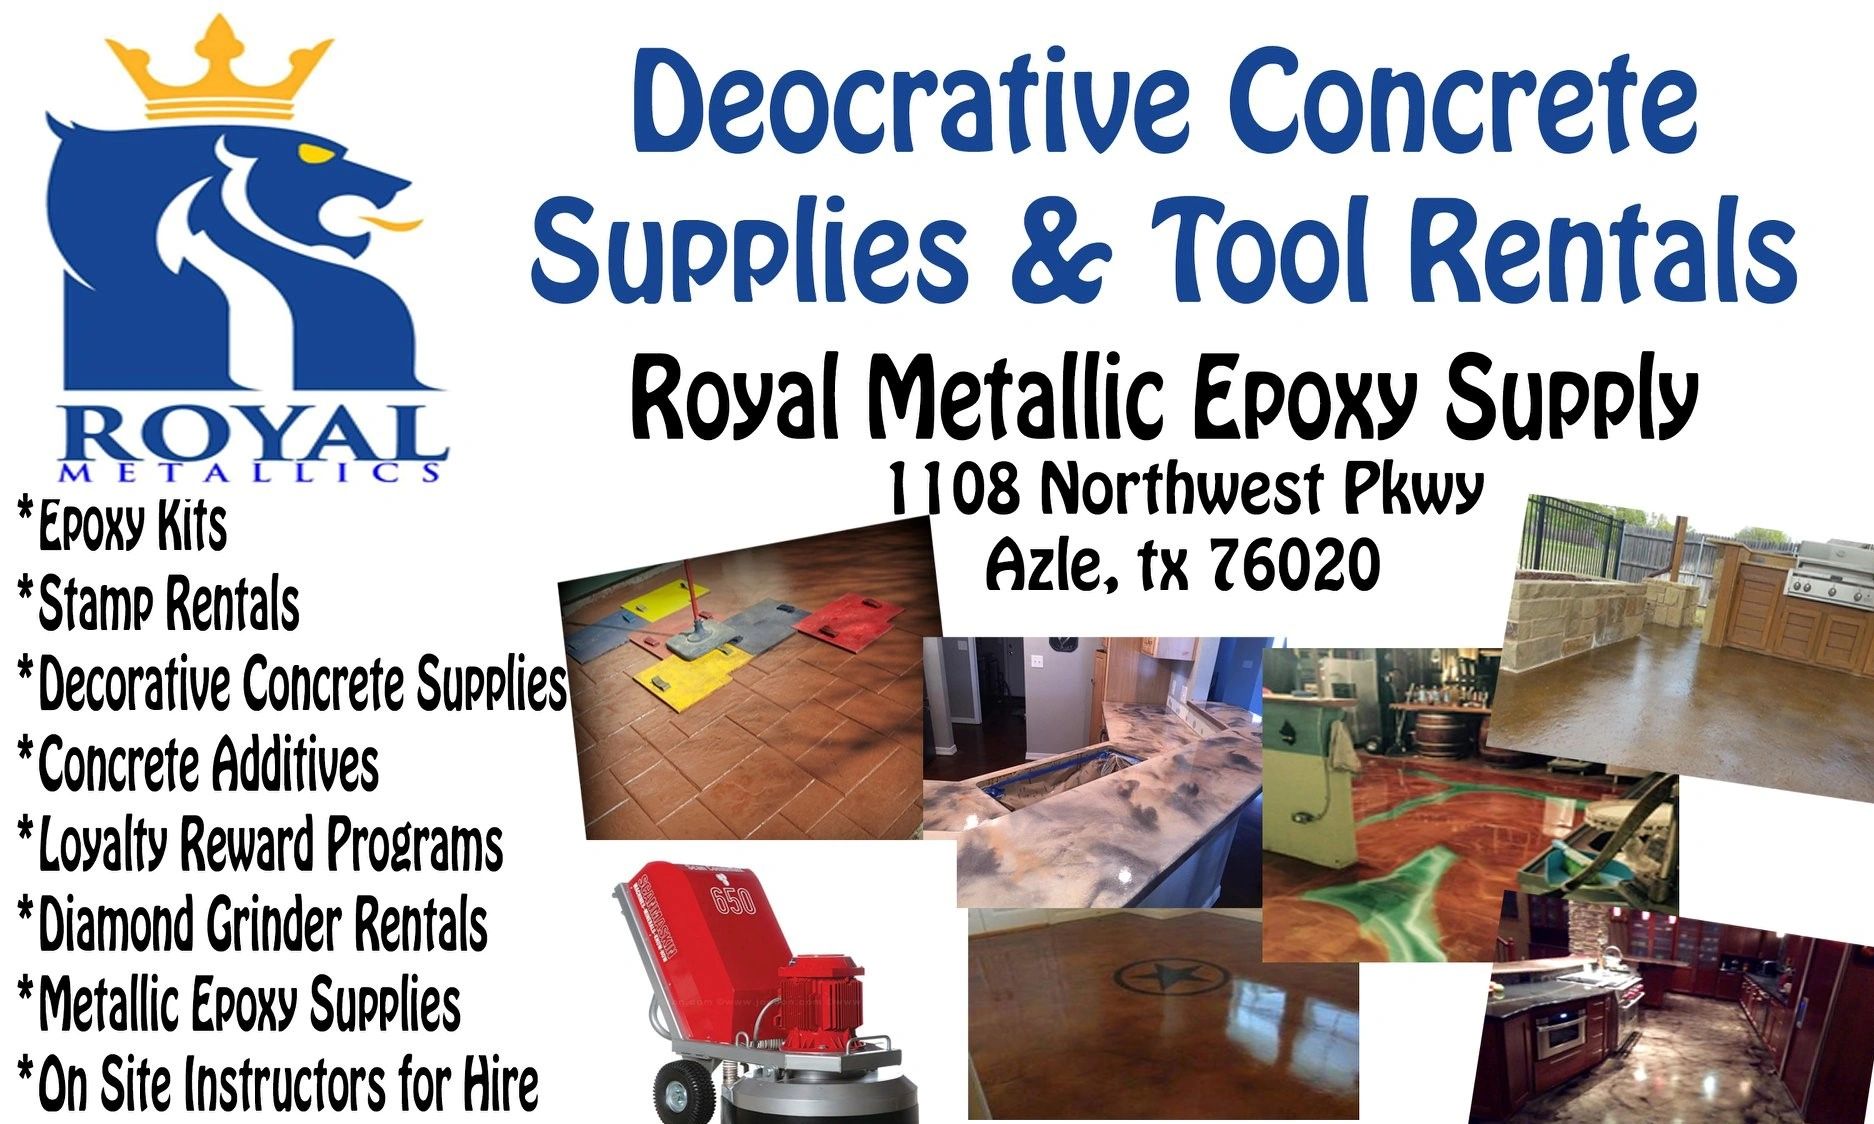 Royal Metallic Epoxy Supply